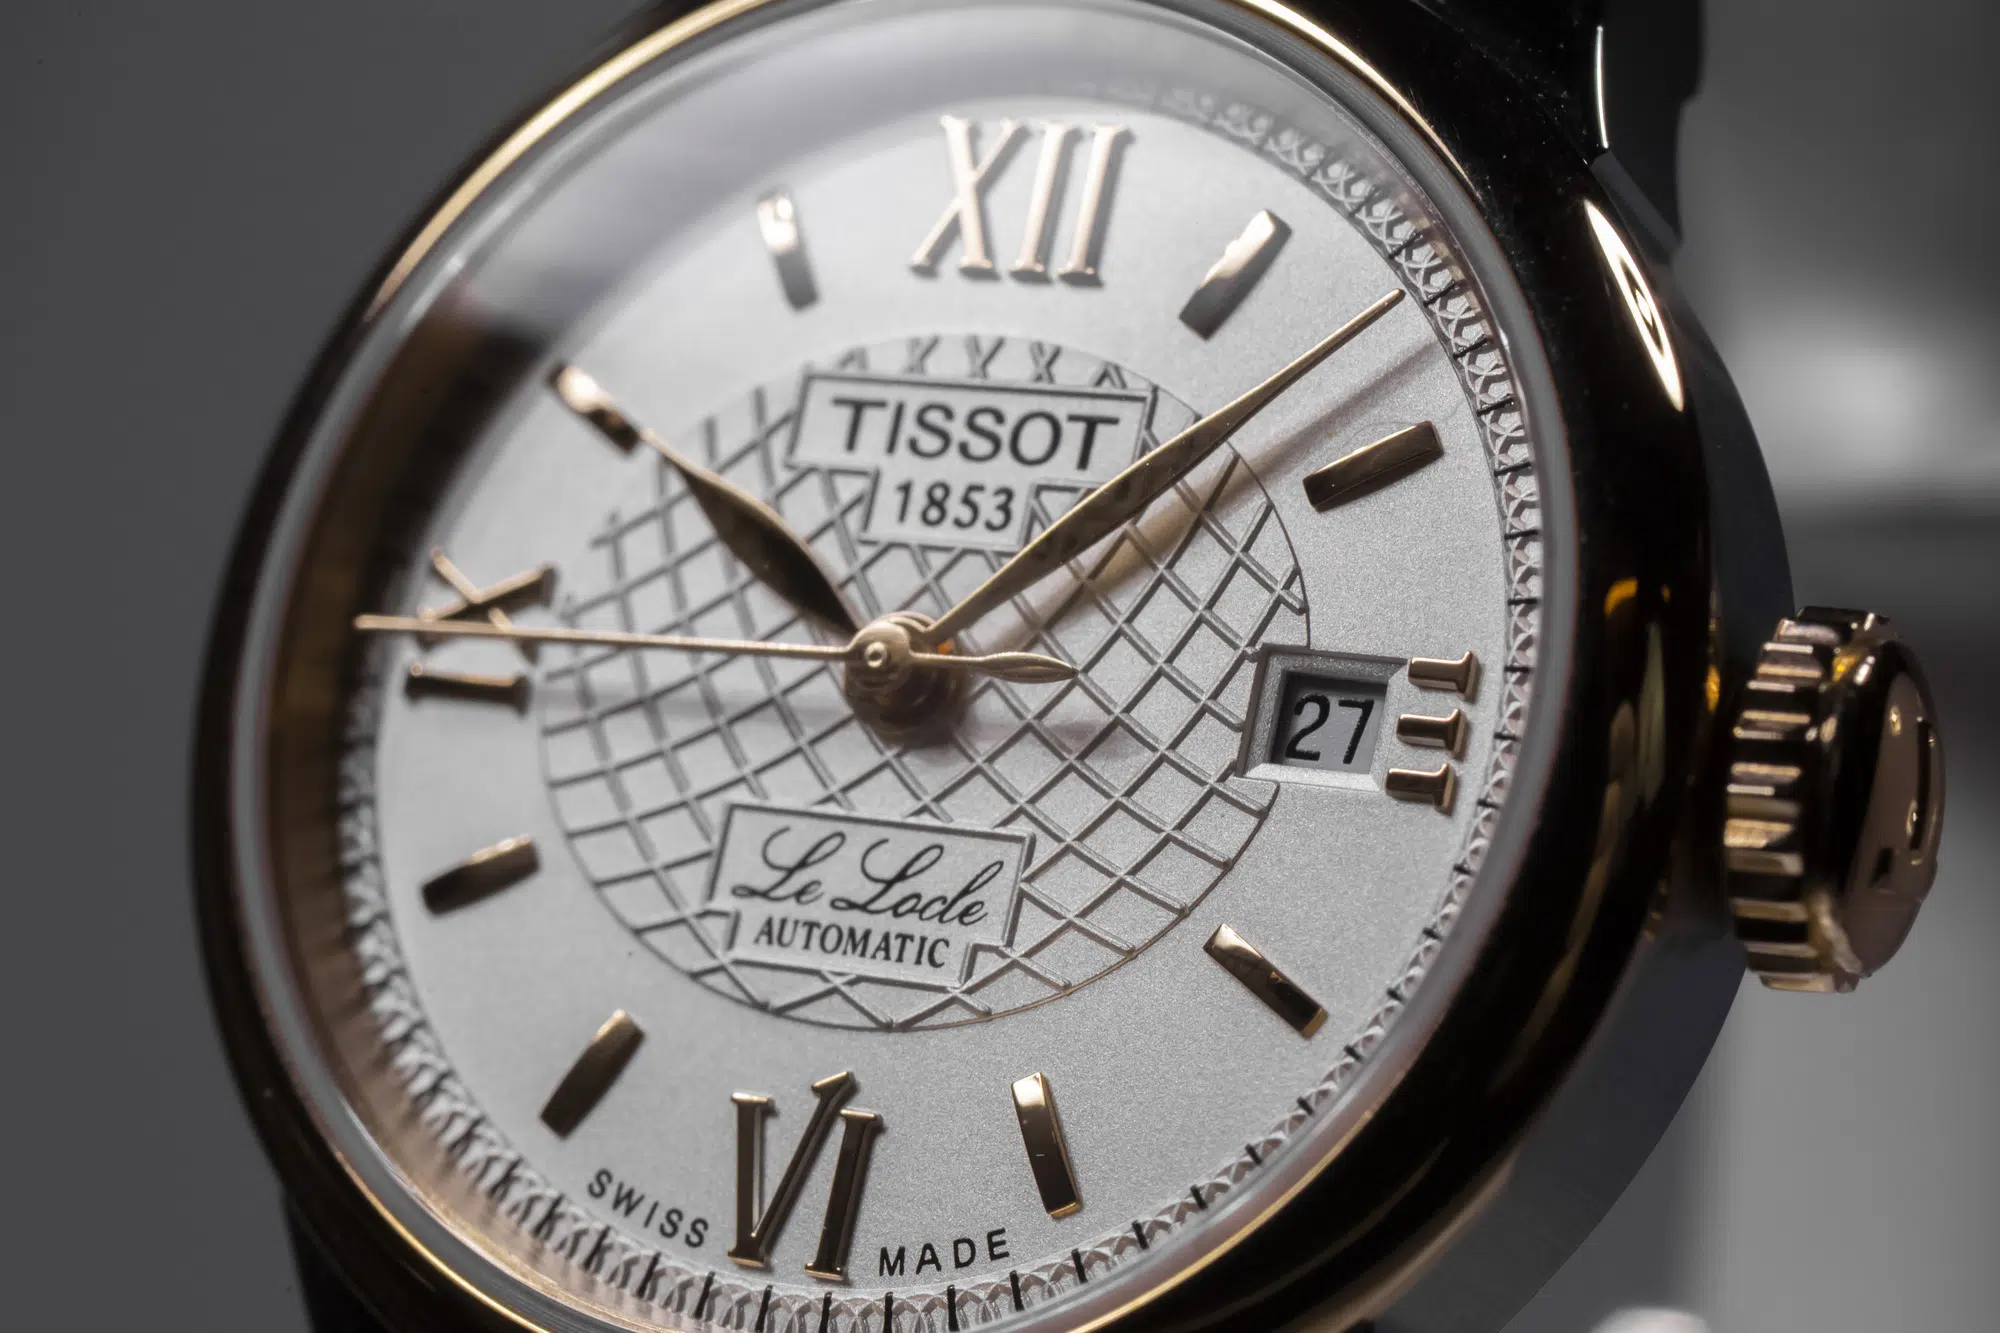 Tissot watch stainless steel case